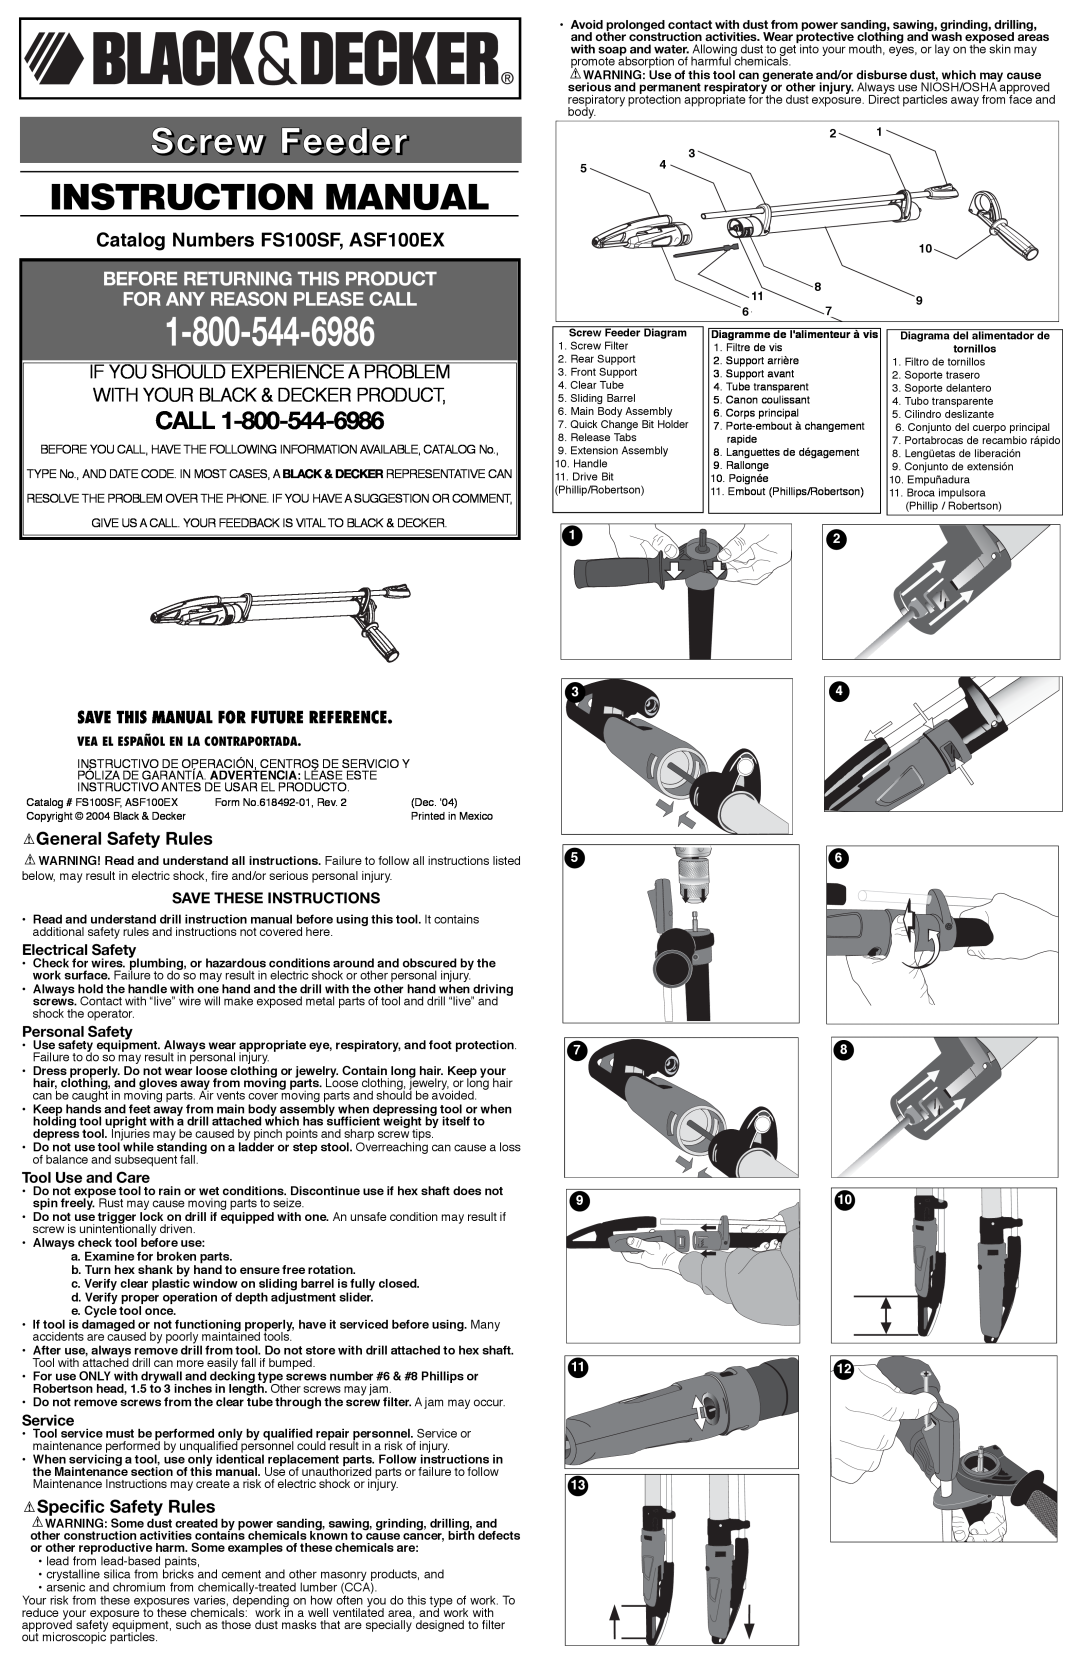 Black & Decker 618492-01 instruction manual General Safety Rules, Specific Safety Rules, Screw Feeder, Instruction Manual 